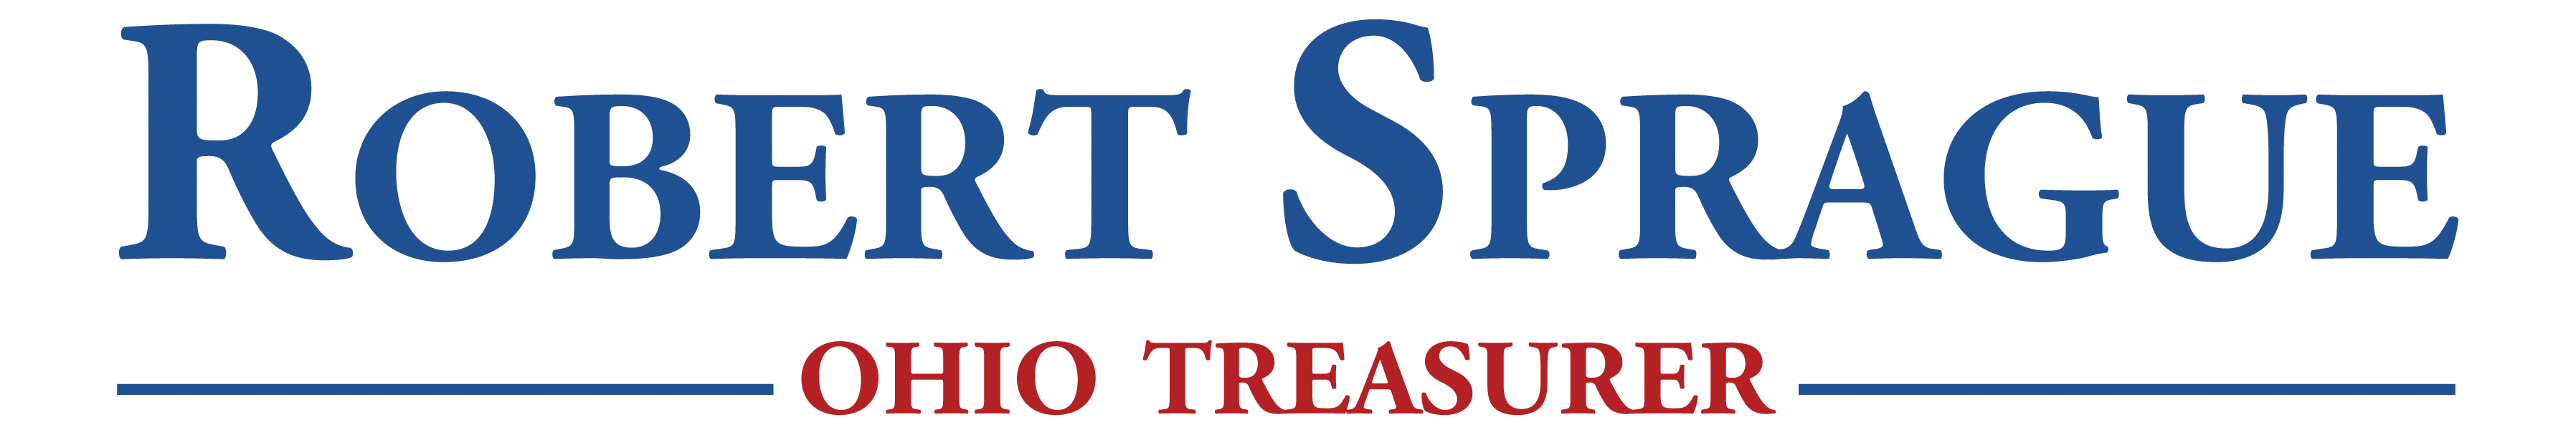 Ohio Treasurer Investor Relations - Official Seal or Logo